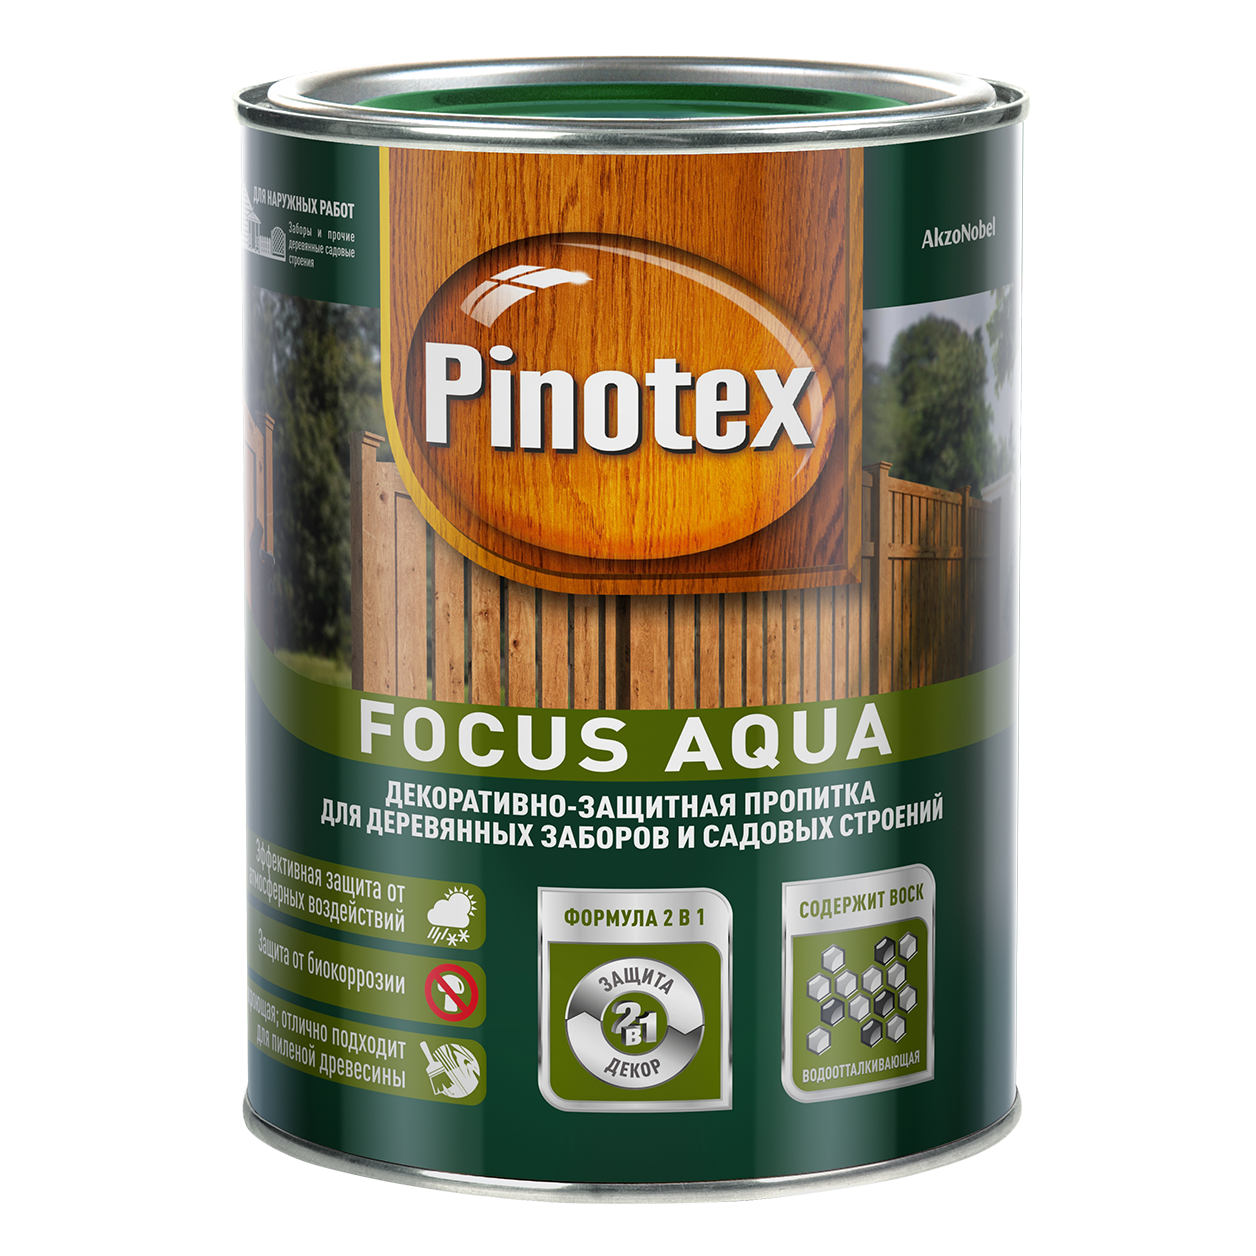 Pinotex Focus Aqua, Красн. дерево, 2,5л., декоративно-защитная пропитка